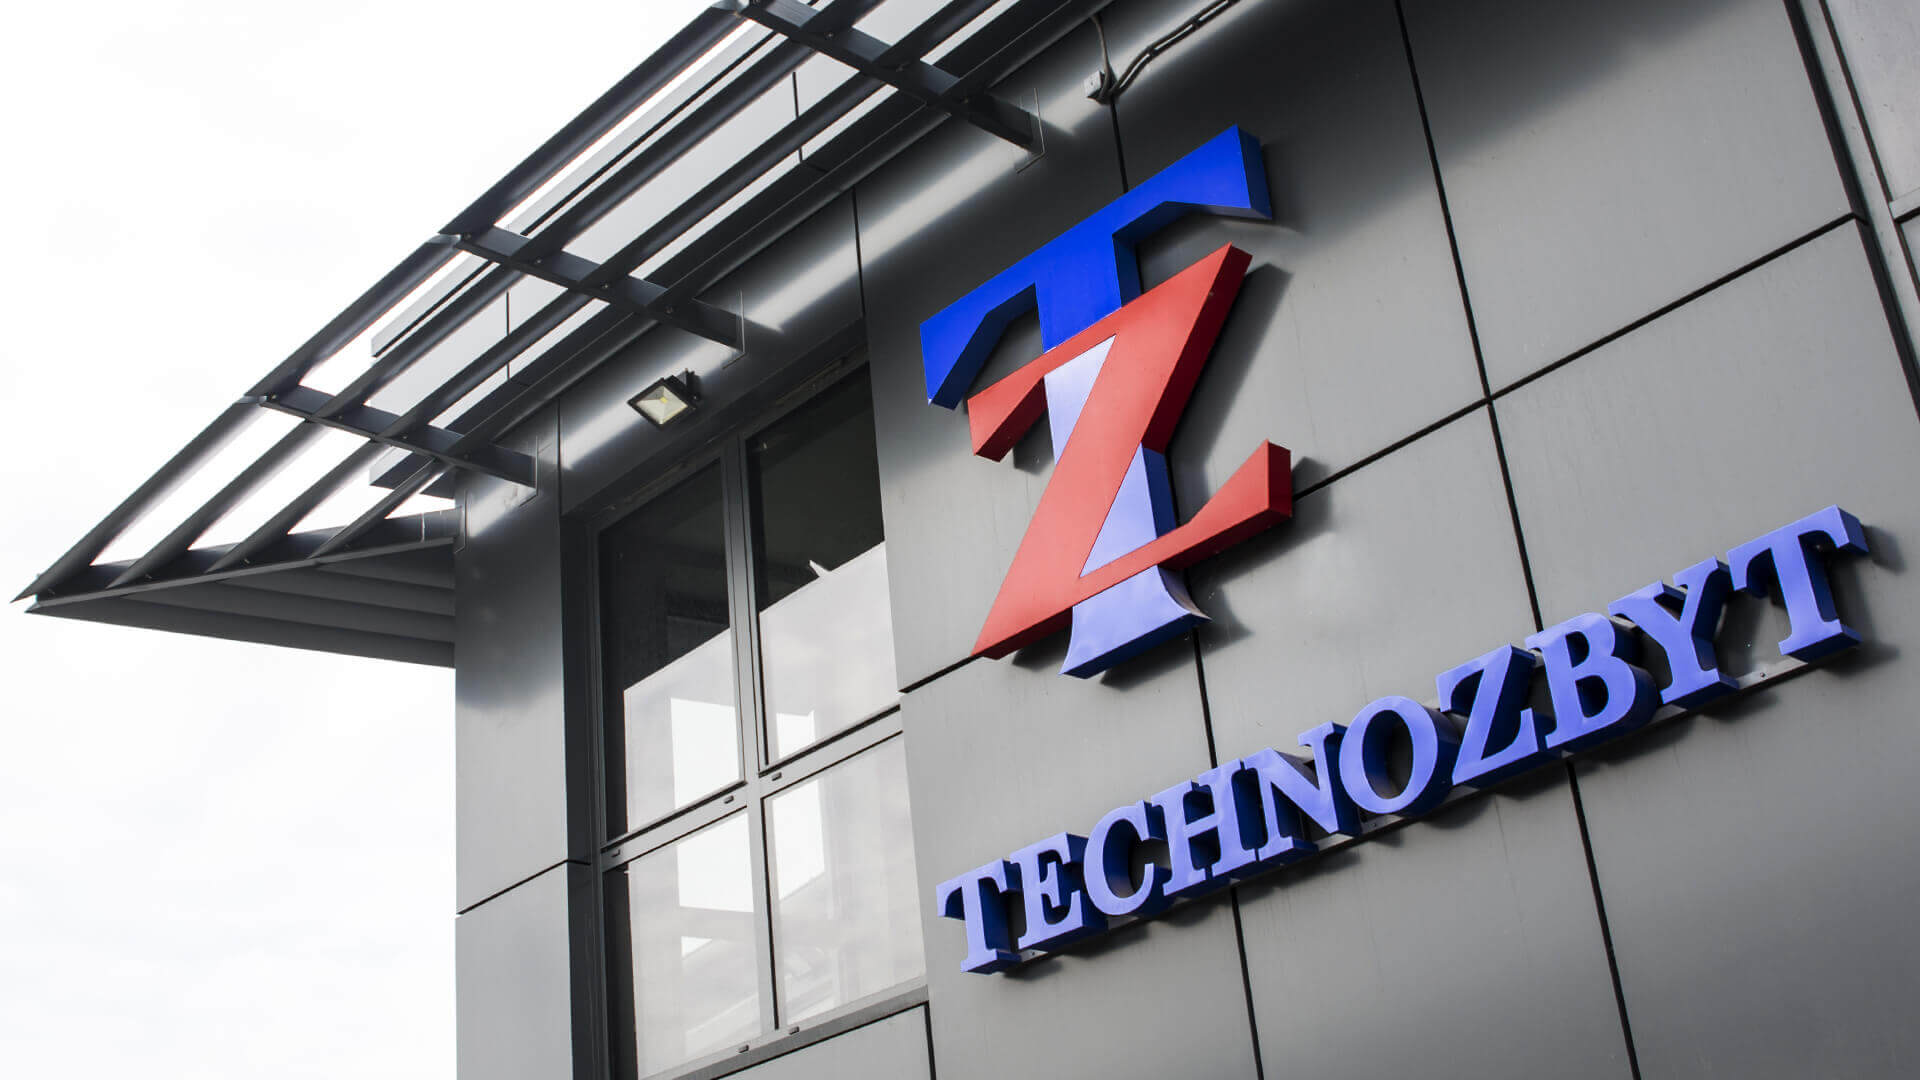 Technozbyt - Technozbyt - spatial luminous letters placed on elevation